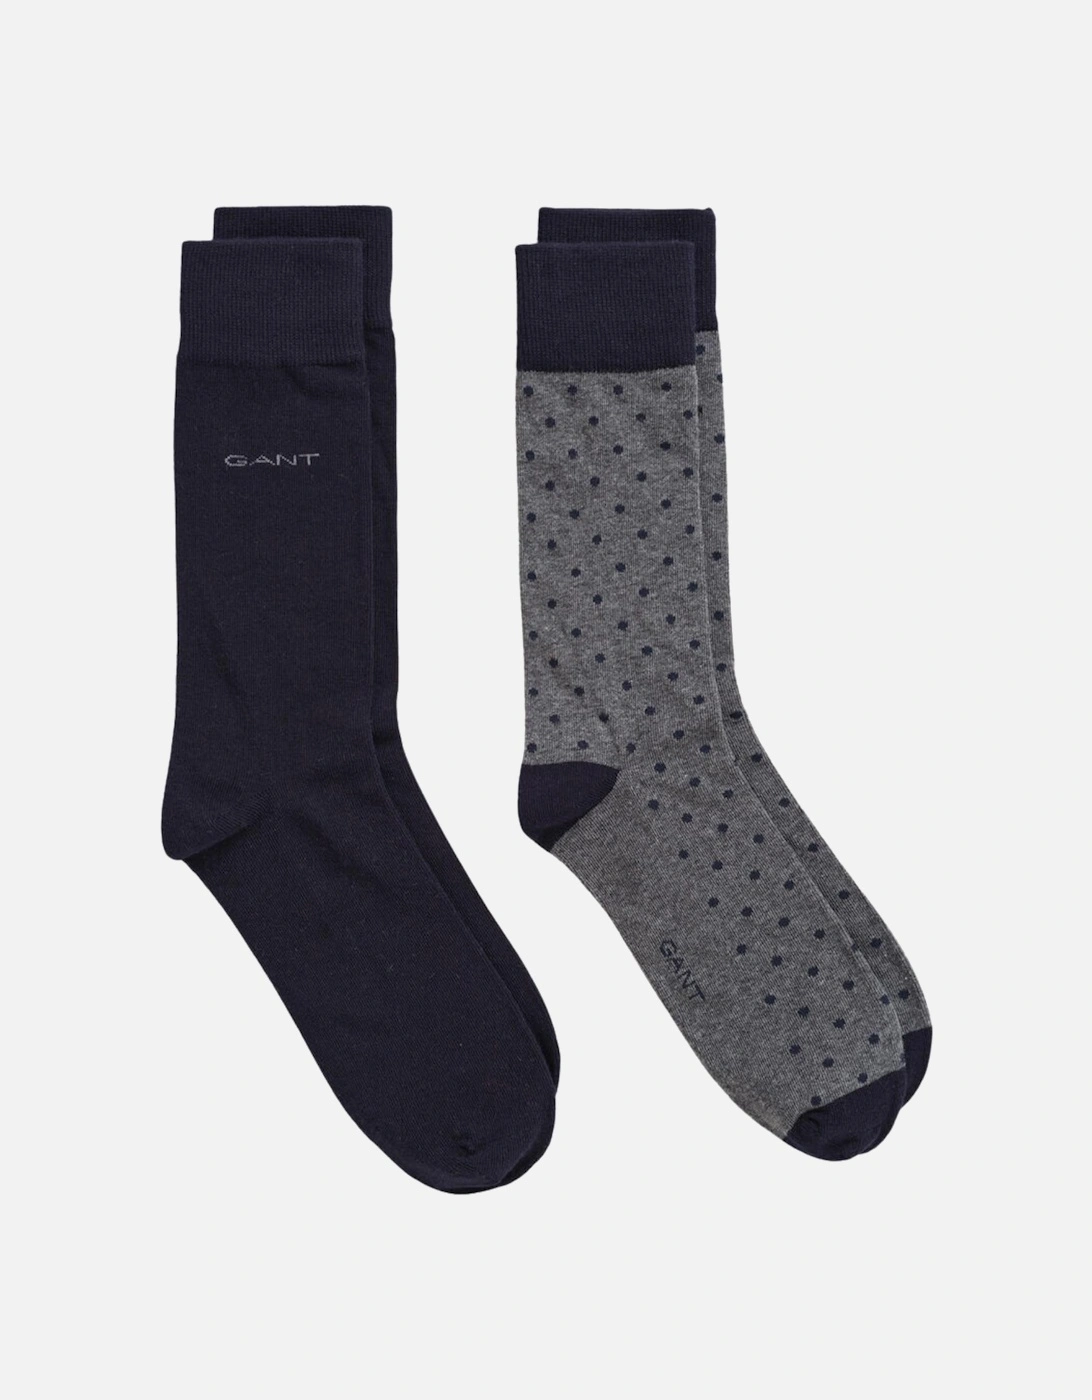 Dot and Solid Socks 2-Pack - Charcoal Melange, 2 of 1